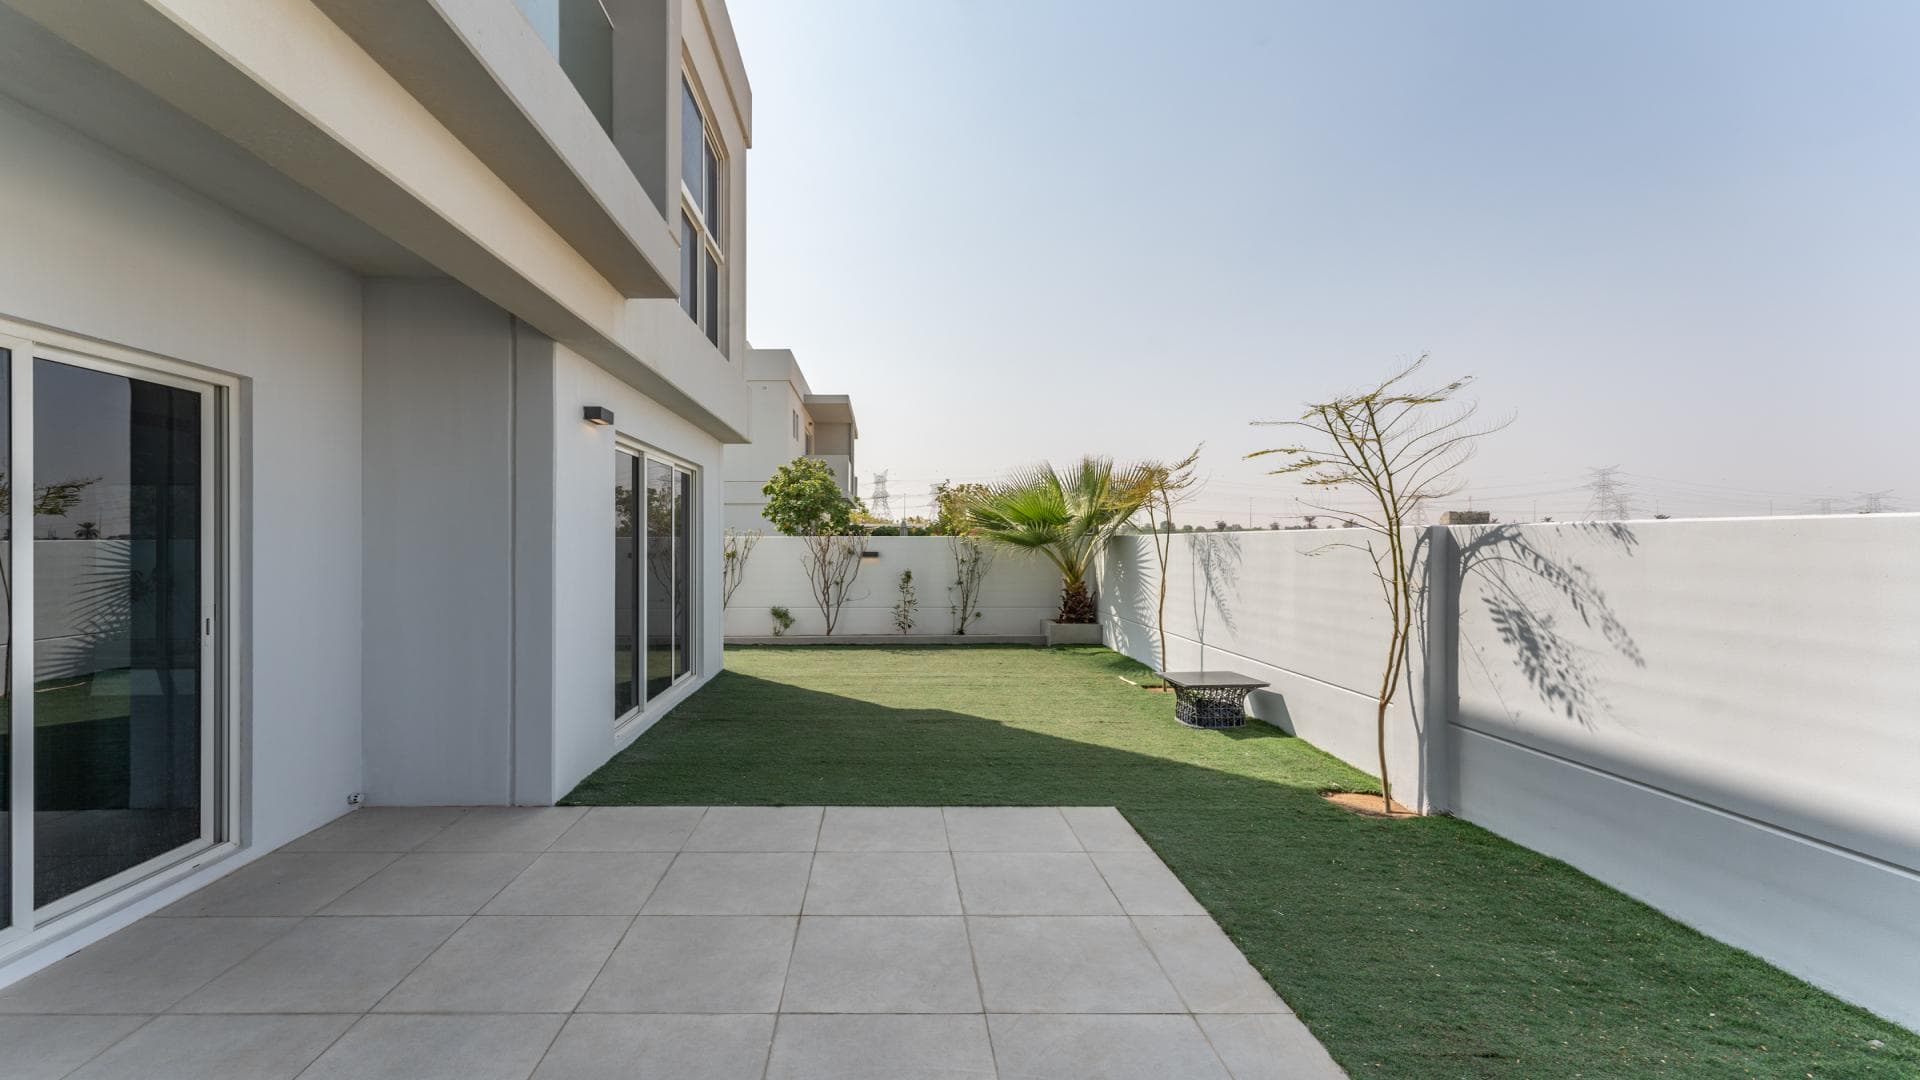 5 Bedroom Villa For Rent Al Kazim Tower 1 Lp17029 24b65d771b8f9c0.jpg